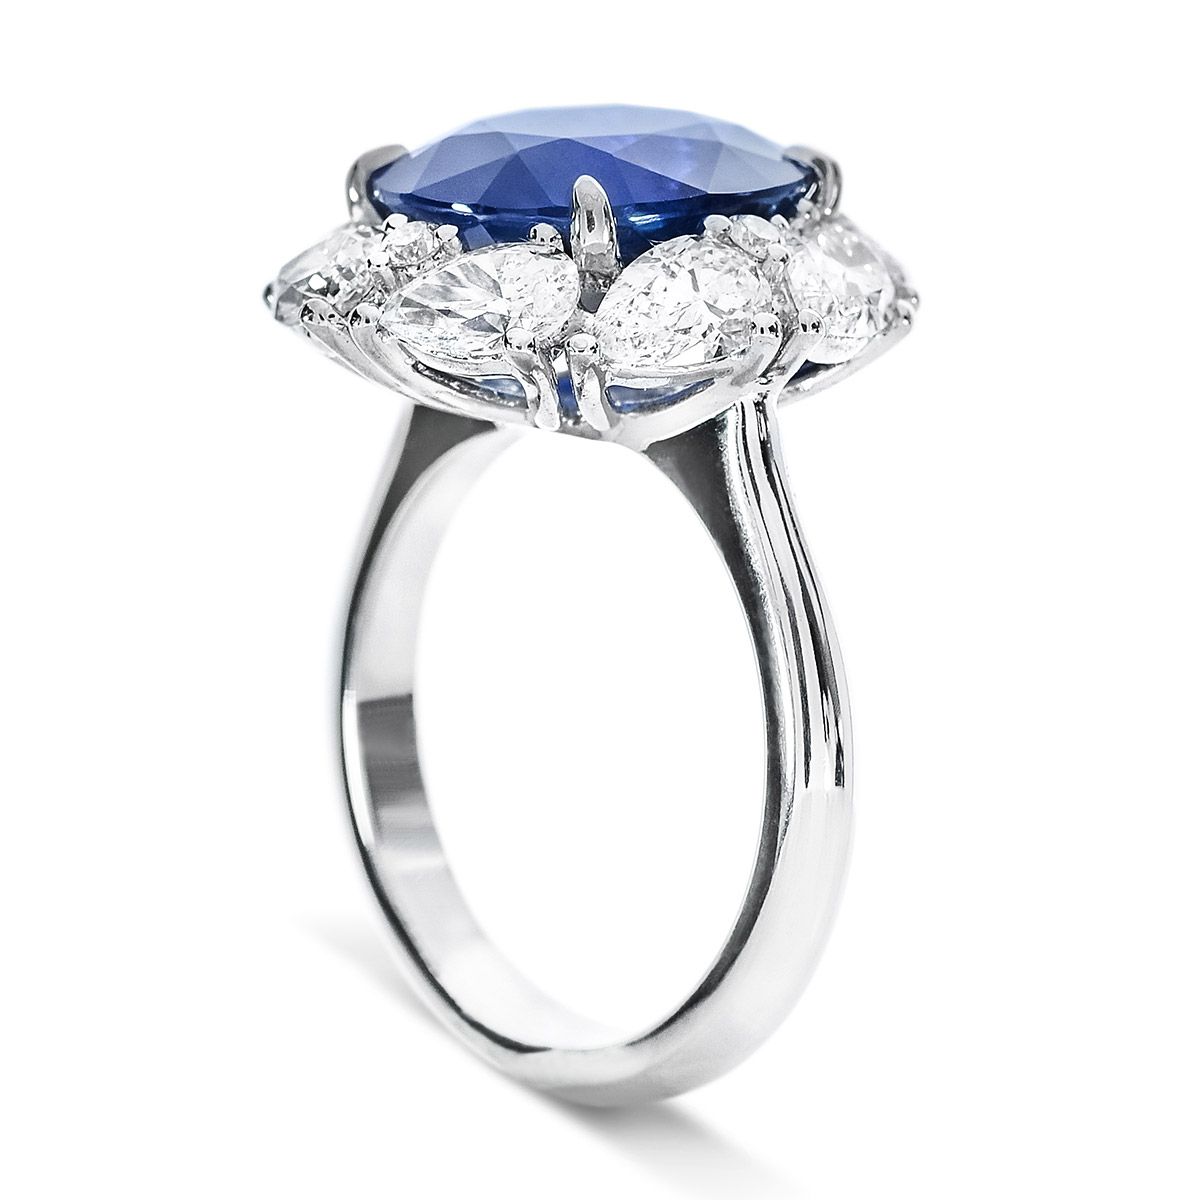 Natural Vivid Blue Burma Sapphire Ring, 6.67 Carat, GRS Certified, GRS2017-022147, Unheated